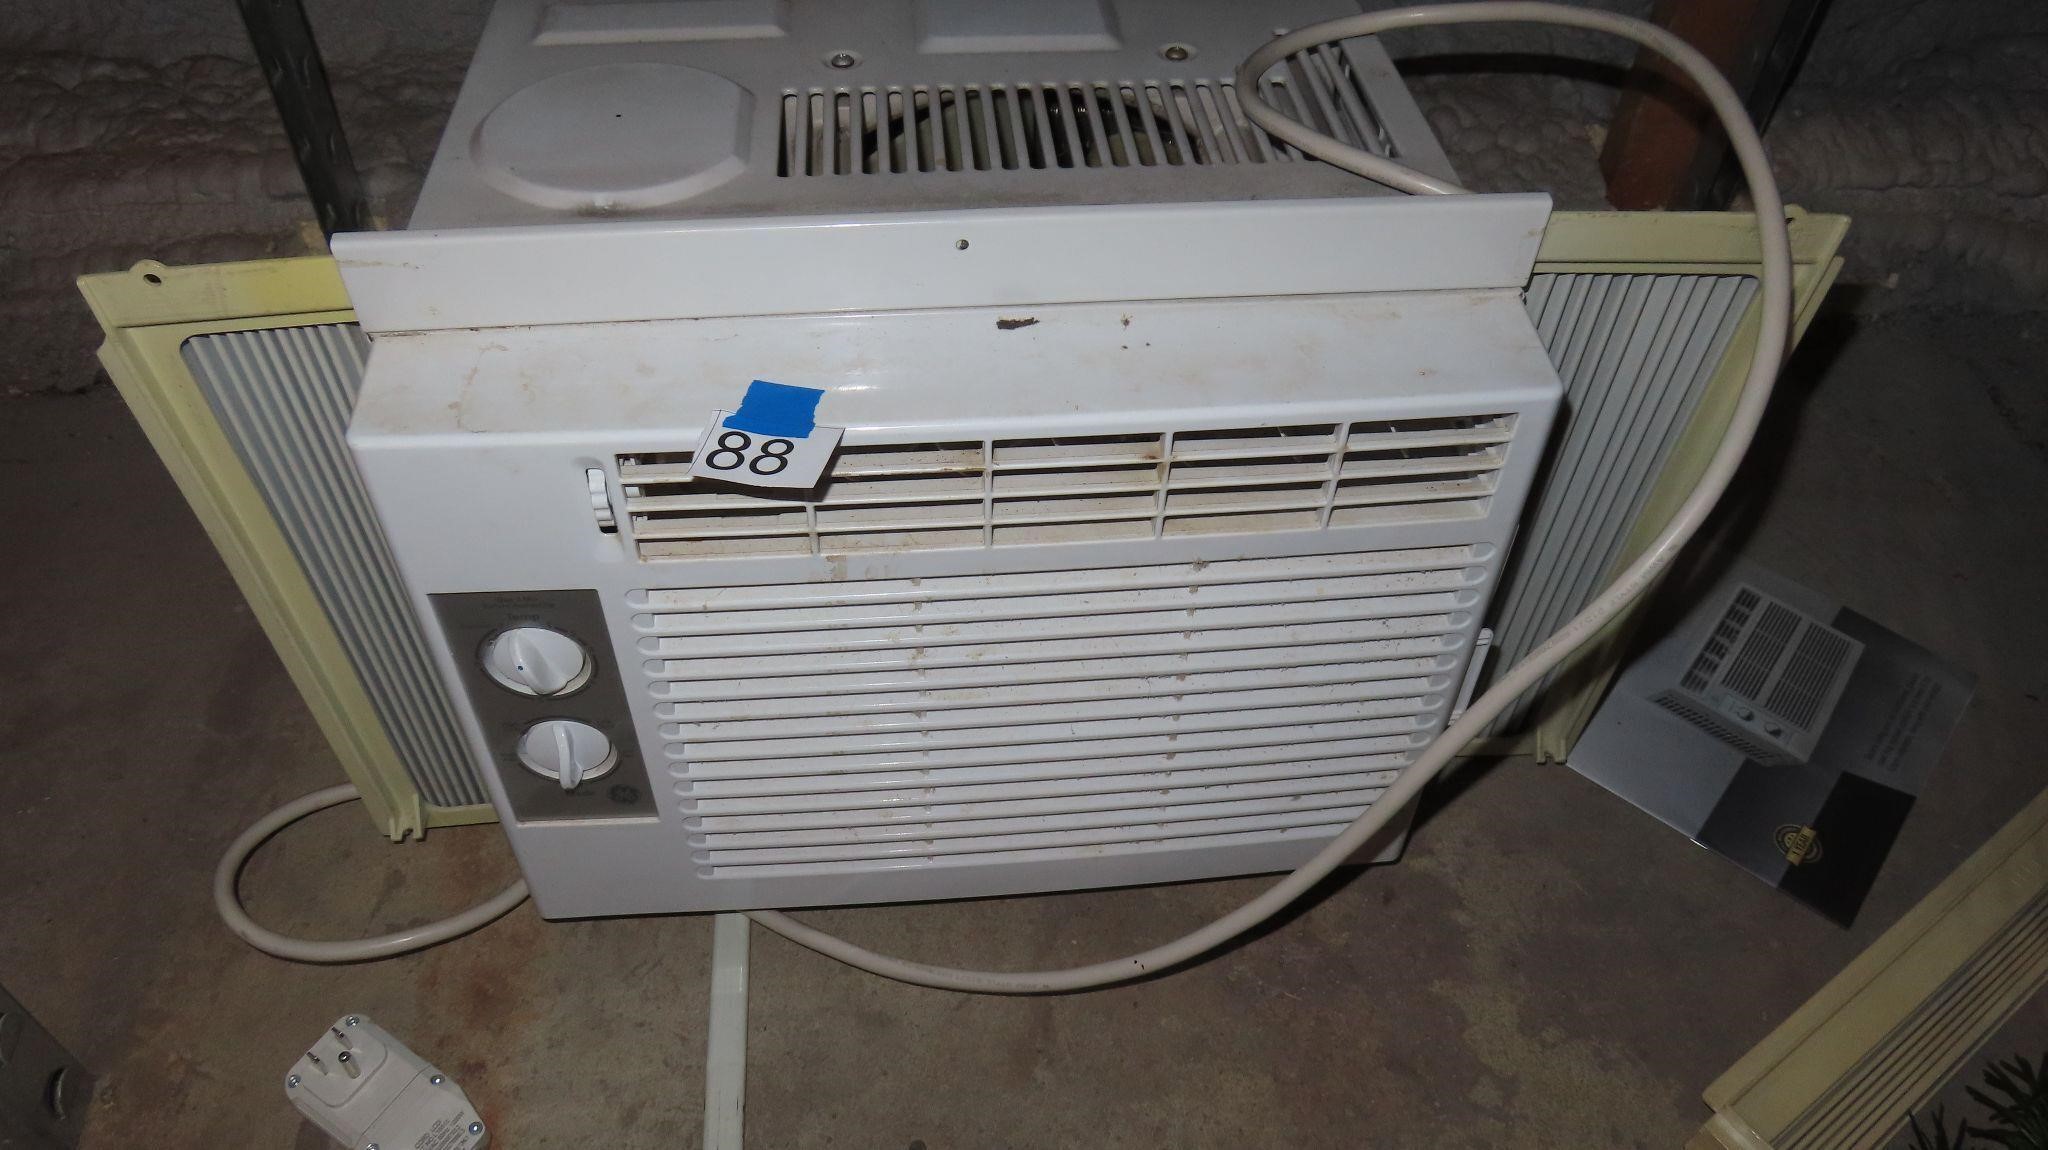 GE window air conditioner